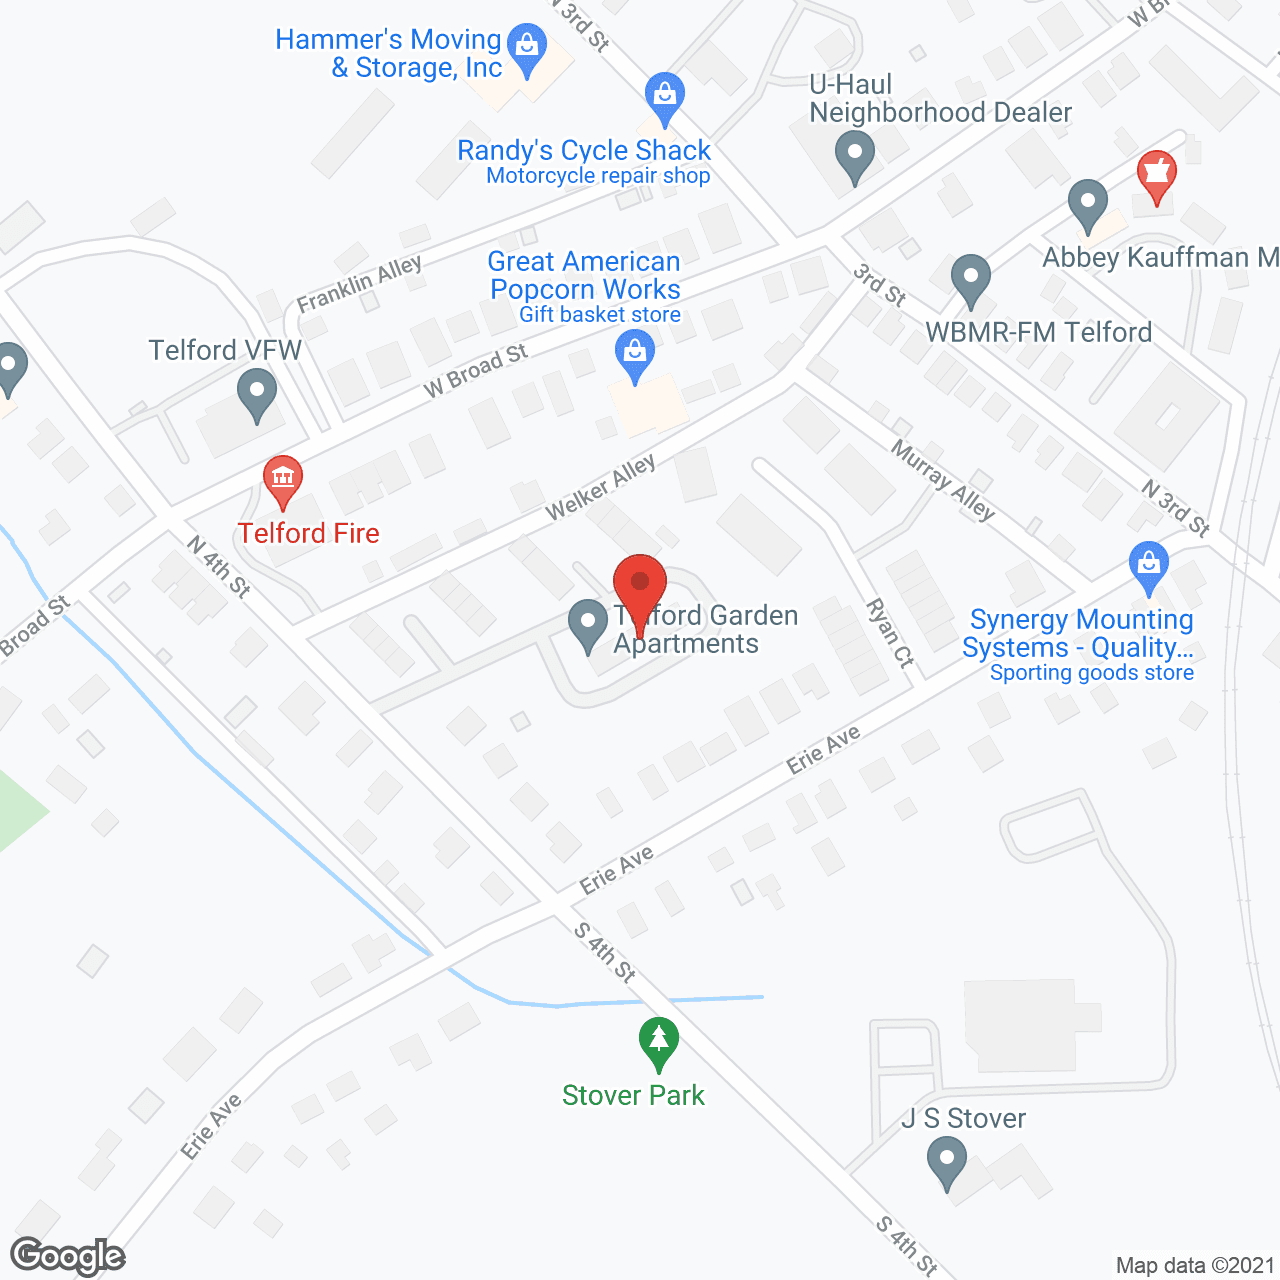 Telford Garden Apartments in google map